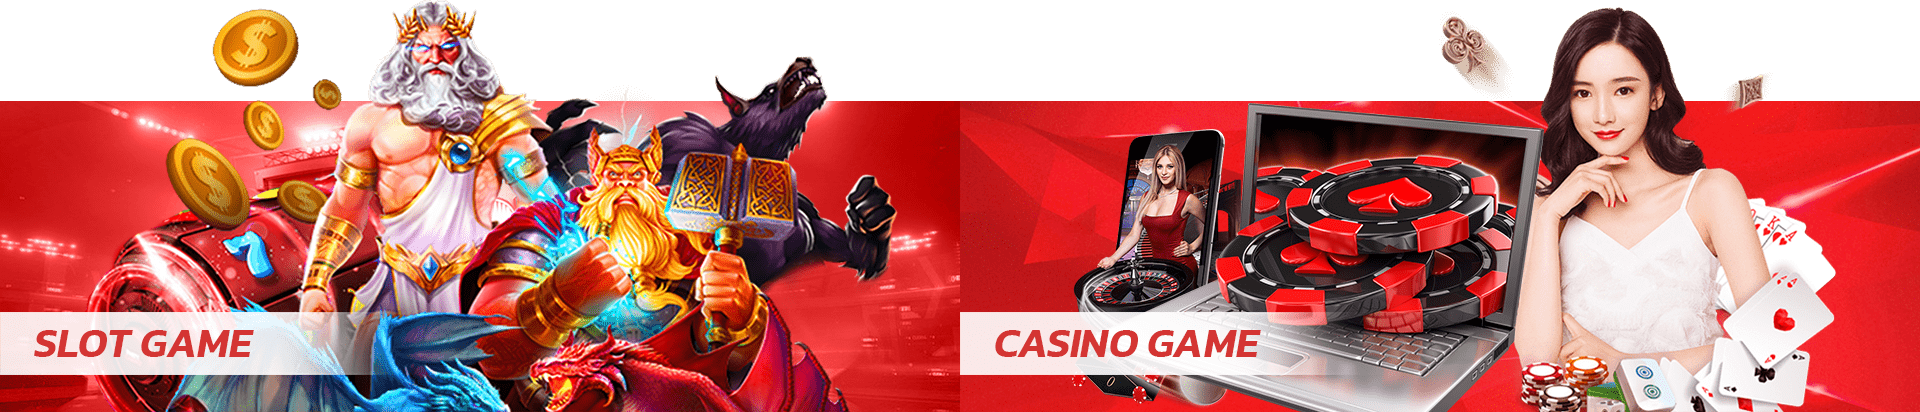 PC-Slot-Casino-Game